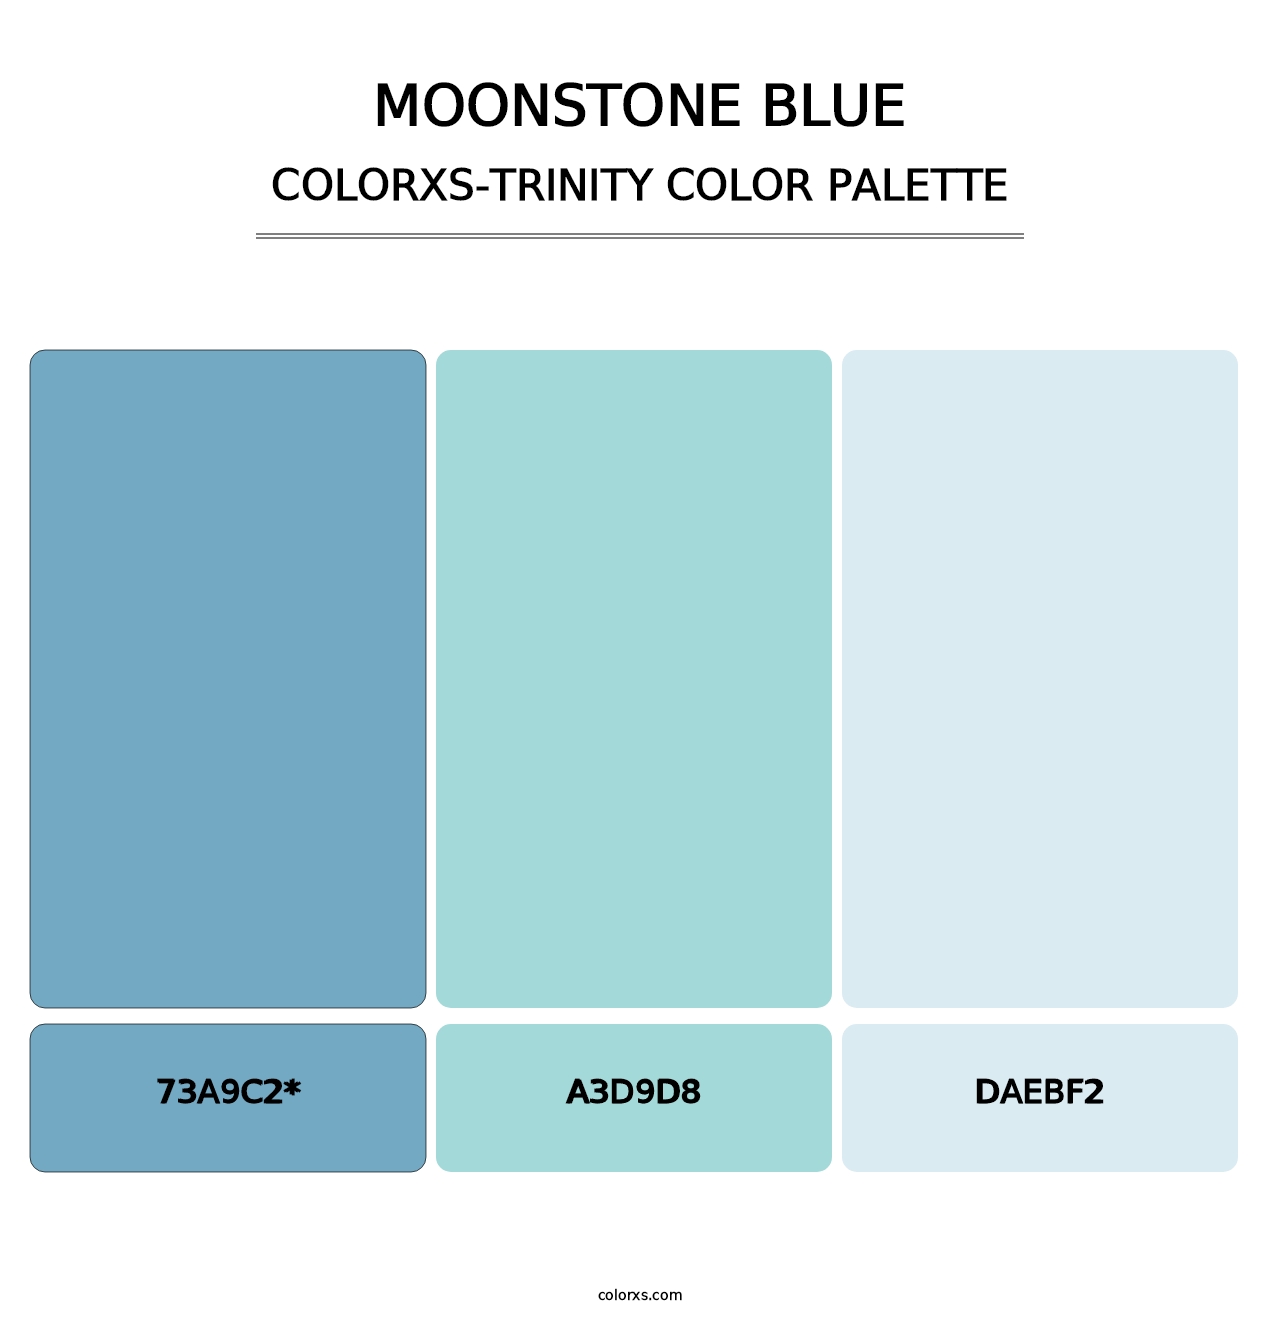 Moonstone Blue - Colorxs Trinity Palette